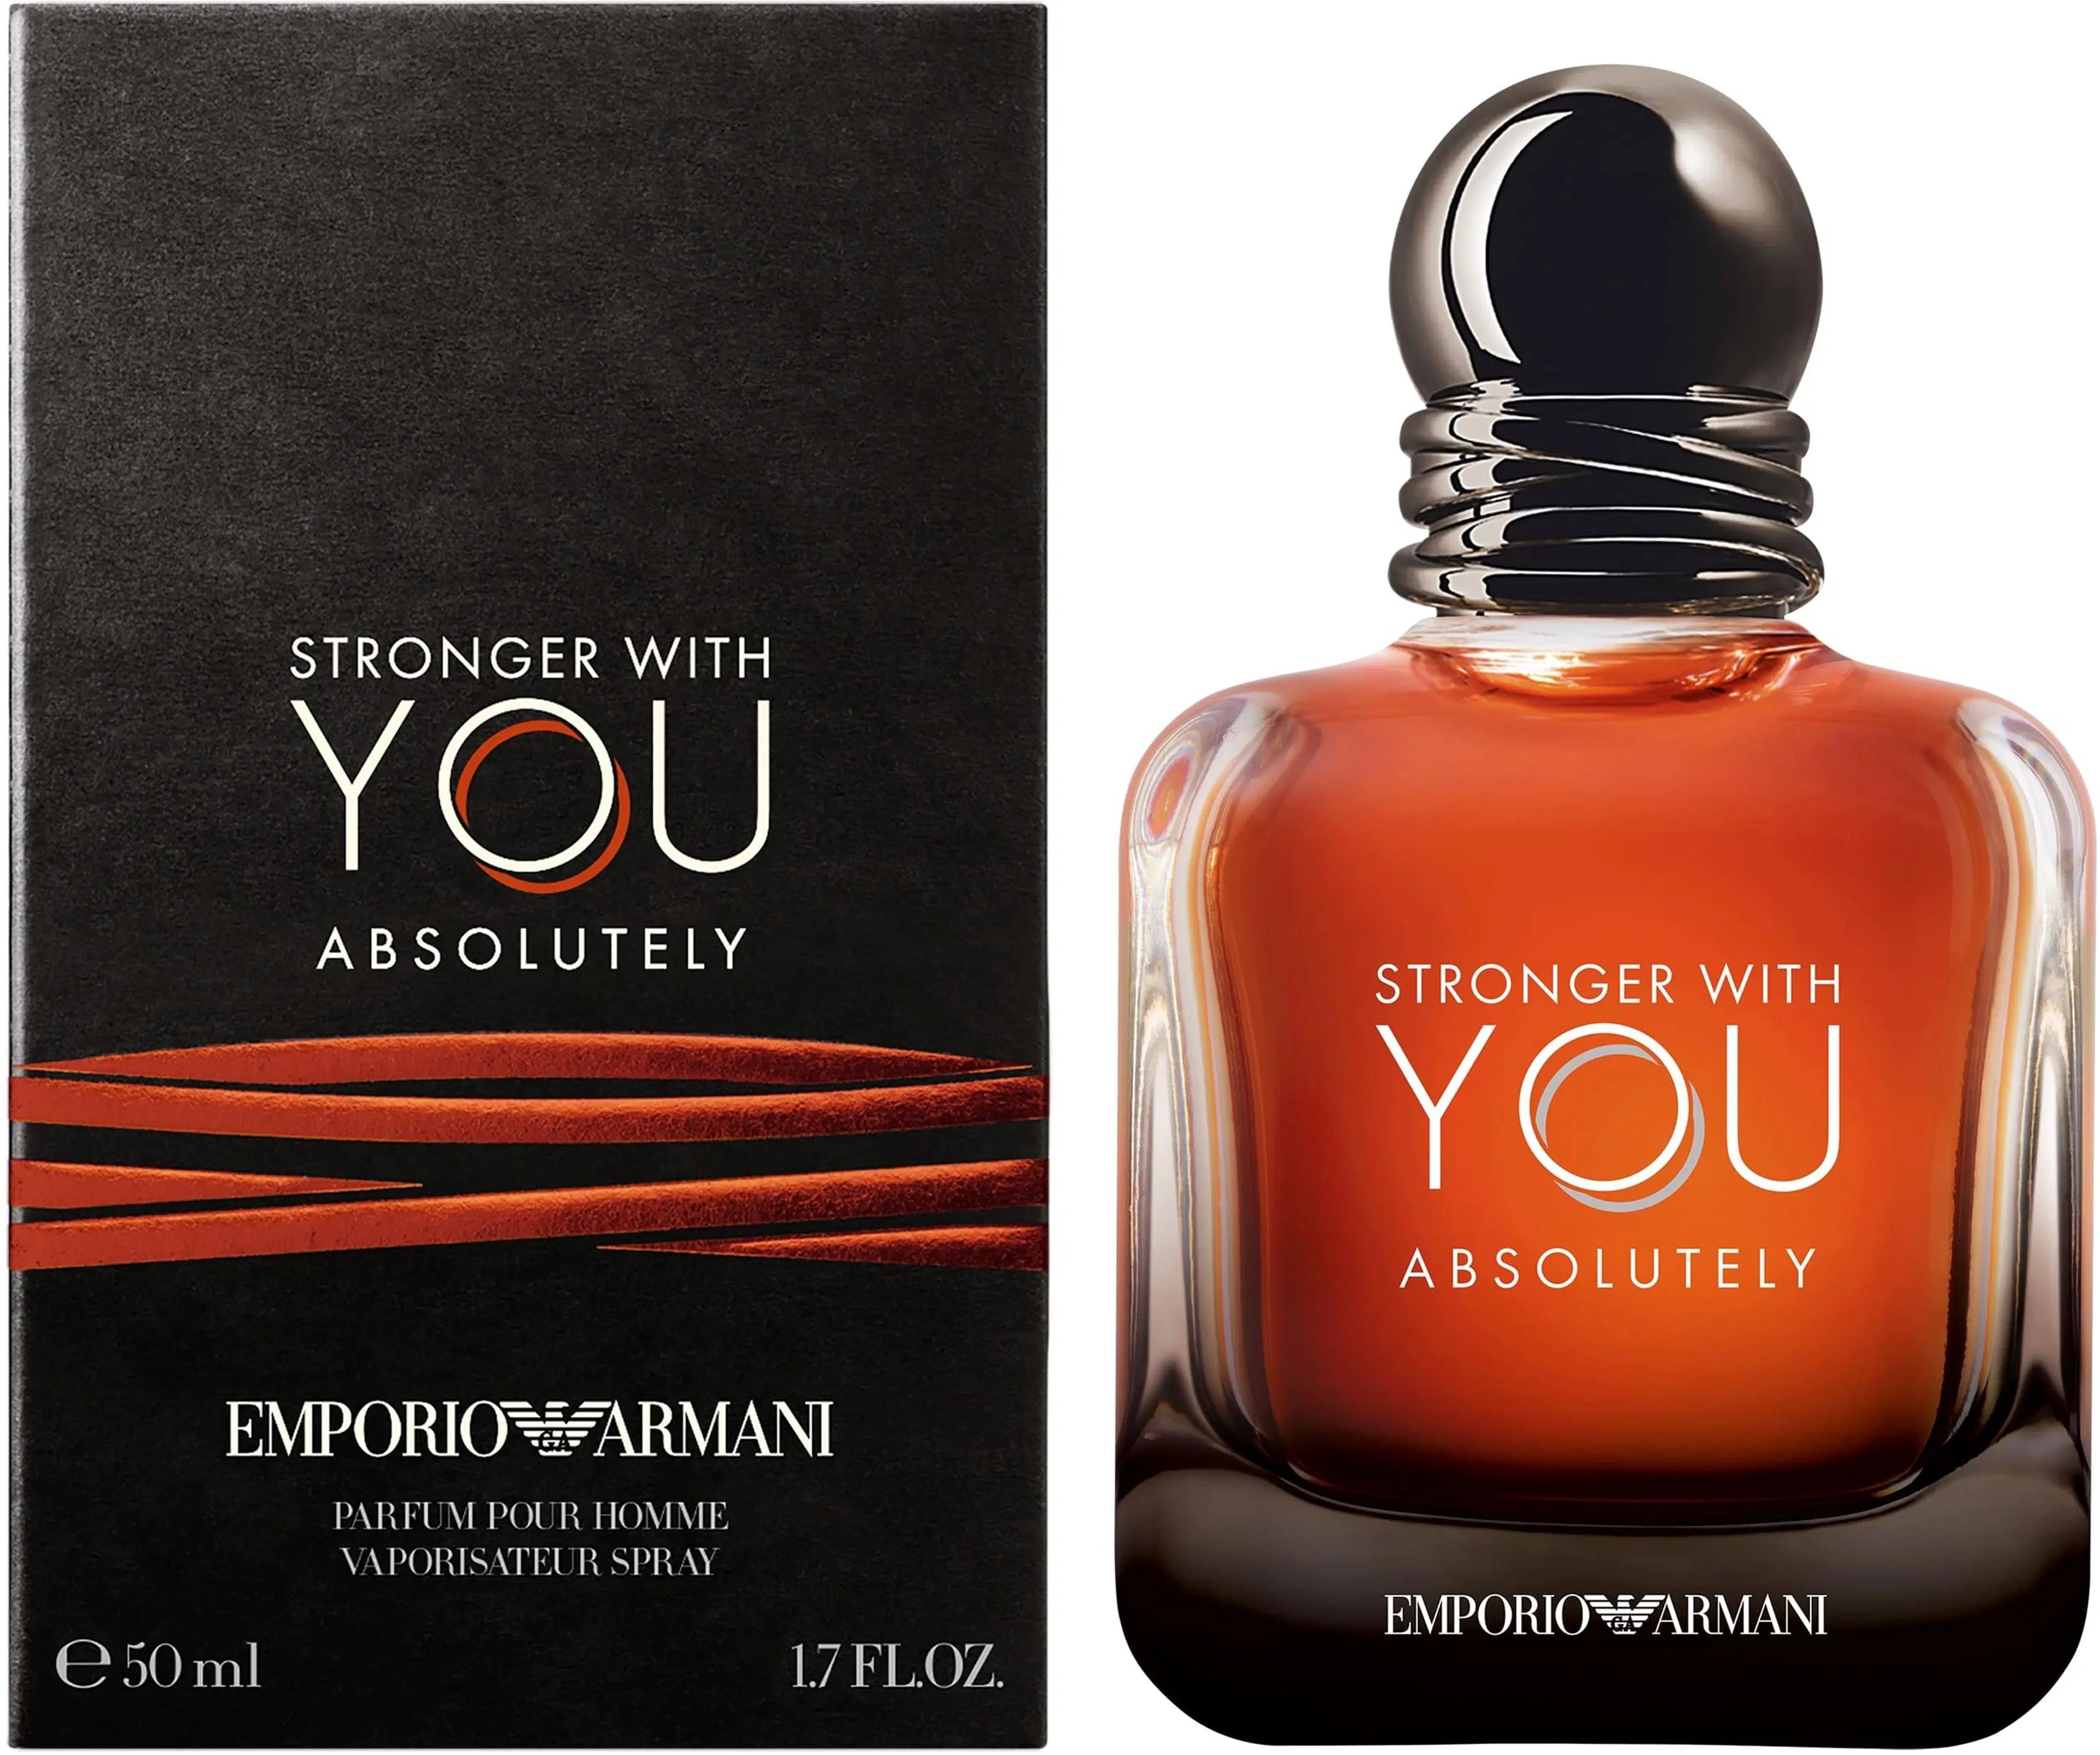 Emporio Armani Stronger With You Absolutely EdP tuoksu 50 ml